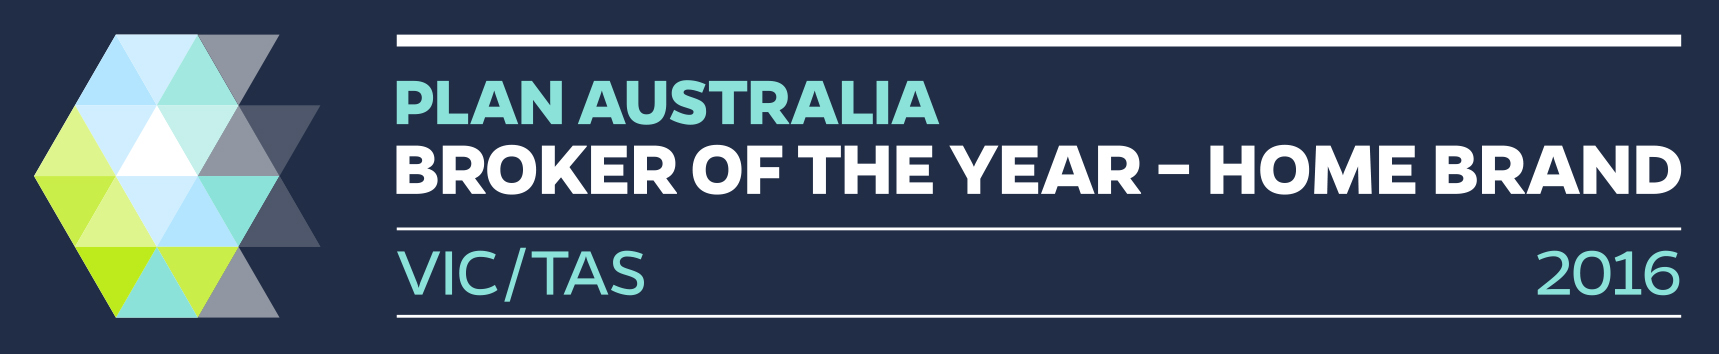 2016 Home Brand Broker of the Year - Plan Australia